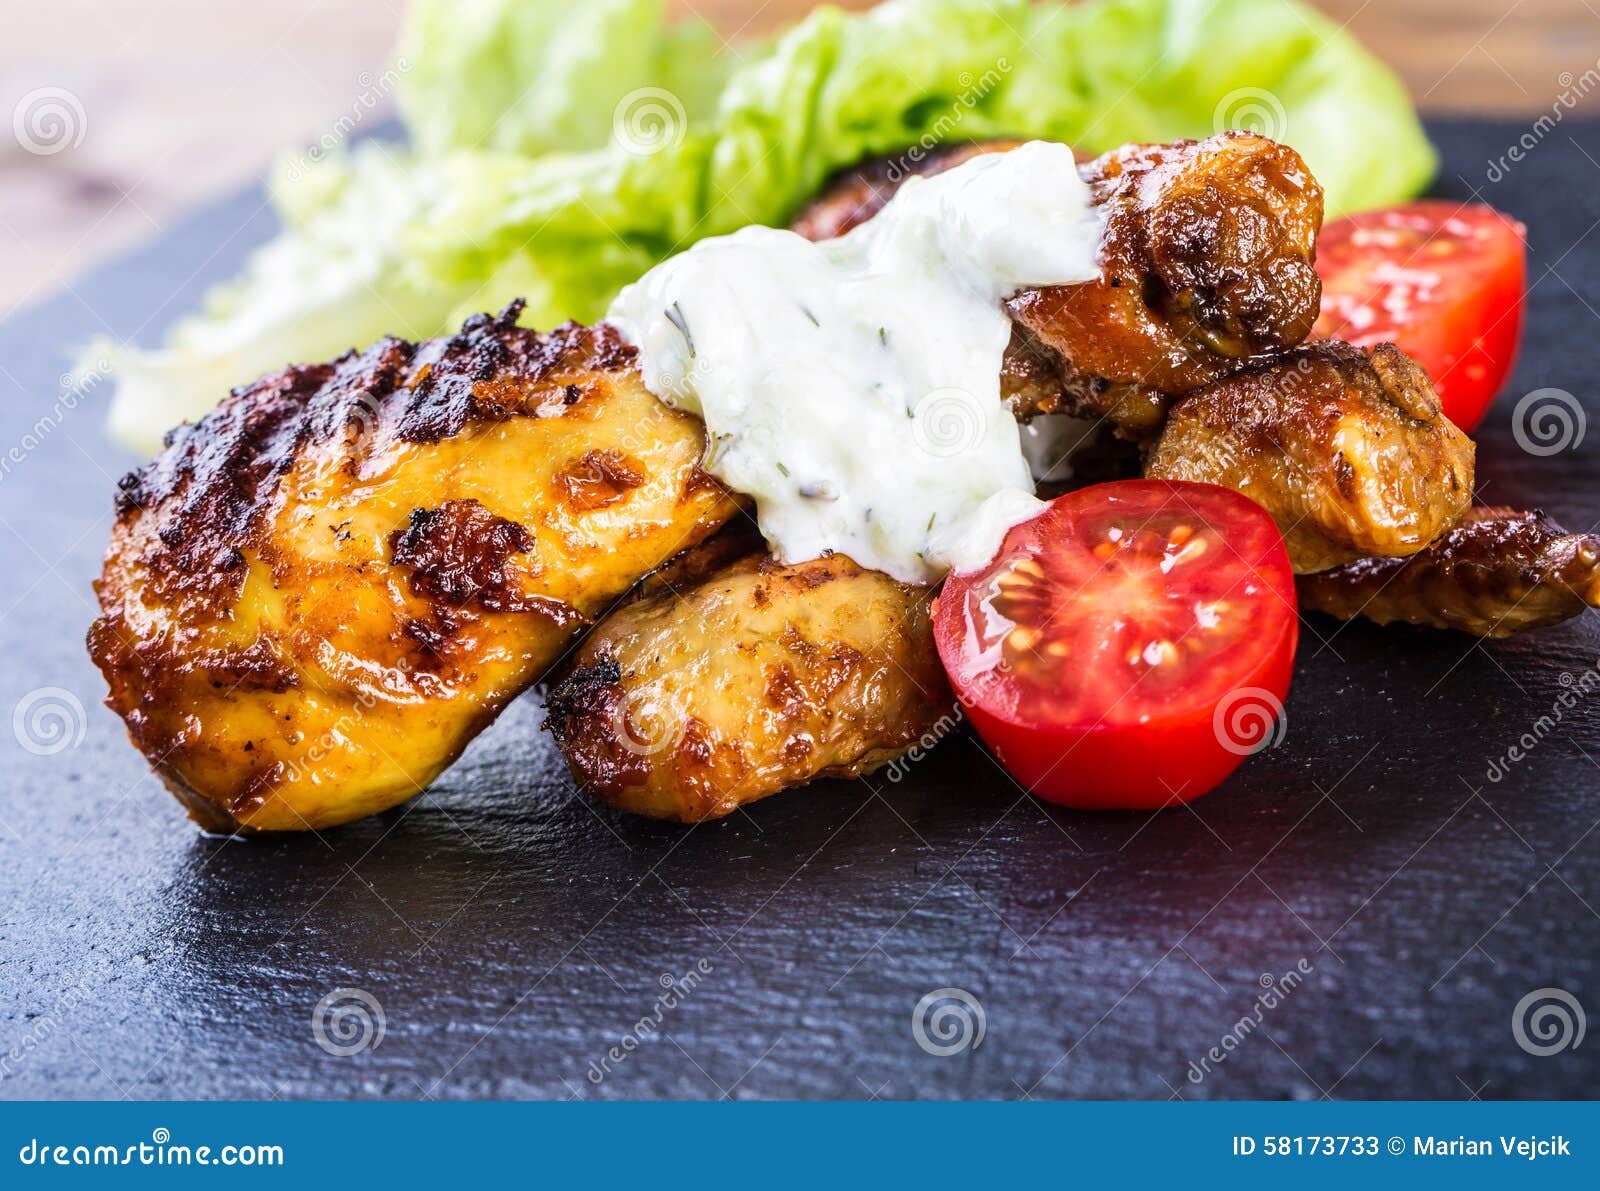 grilling. grilled chicken. grilled chicken legs. grilled chicken legs, lettuce and cherry tomatoes. traditional cuisine.